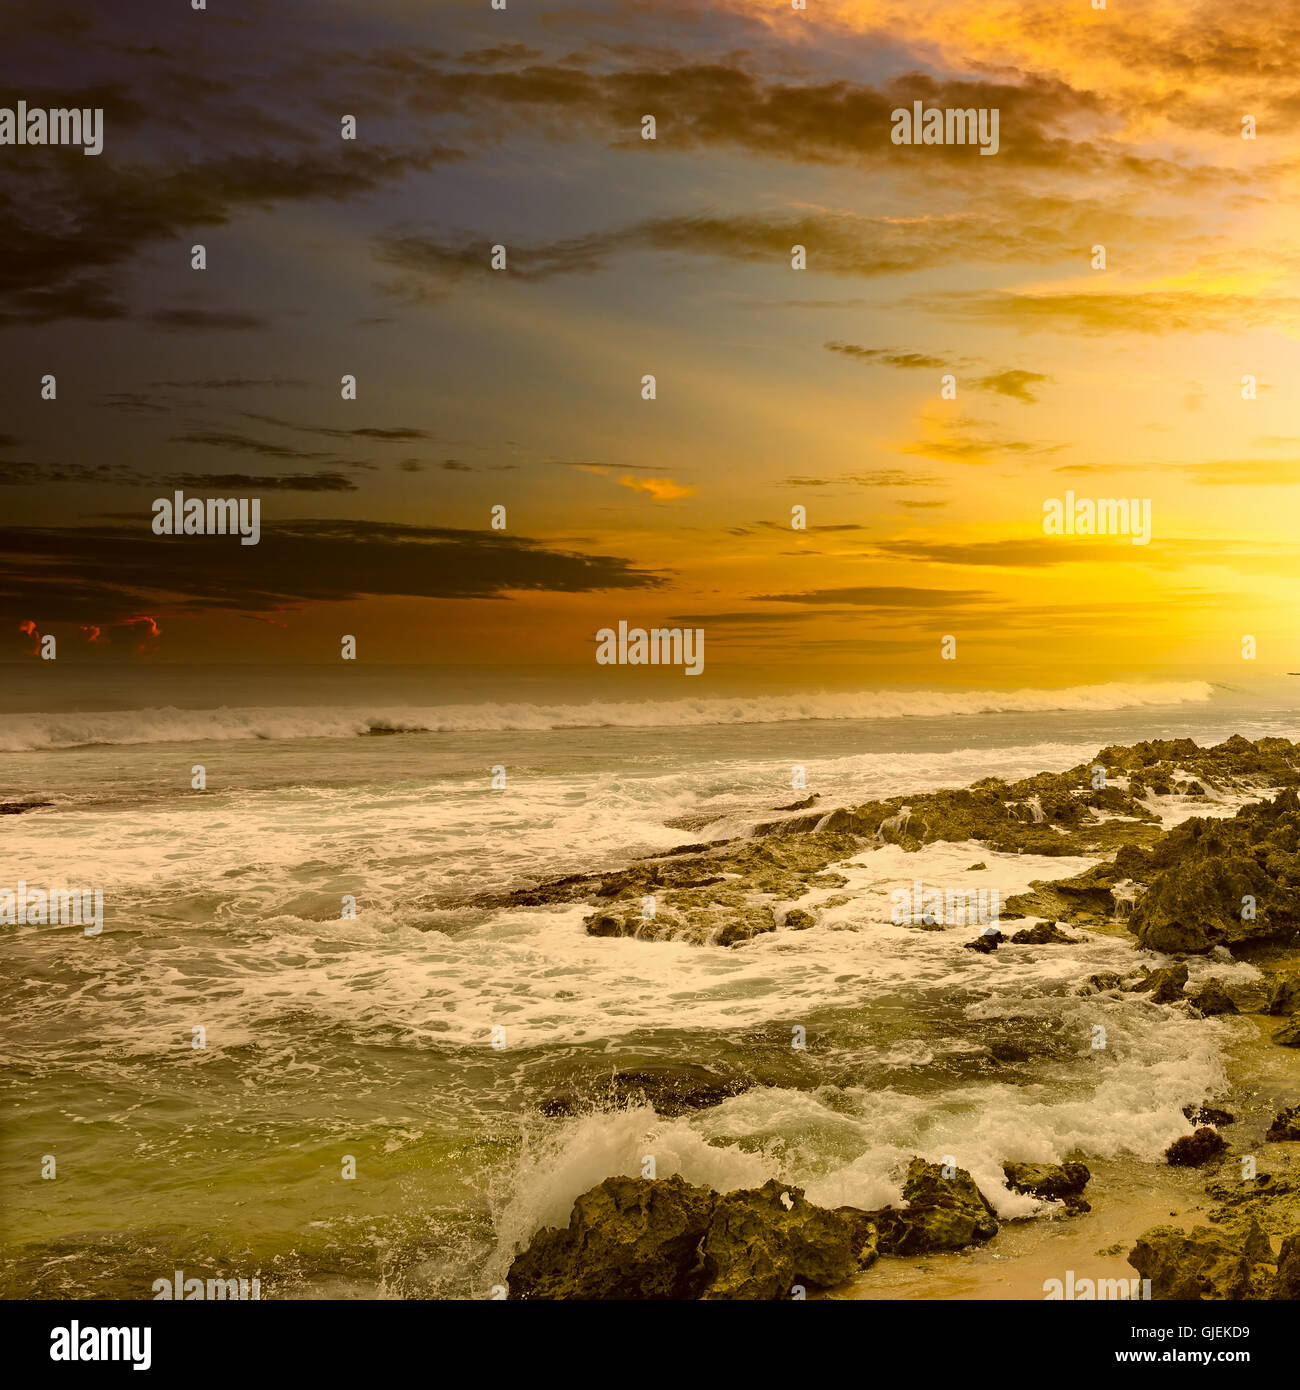 Fantastischen Sonnenuntergang am Meer Stockfoto